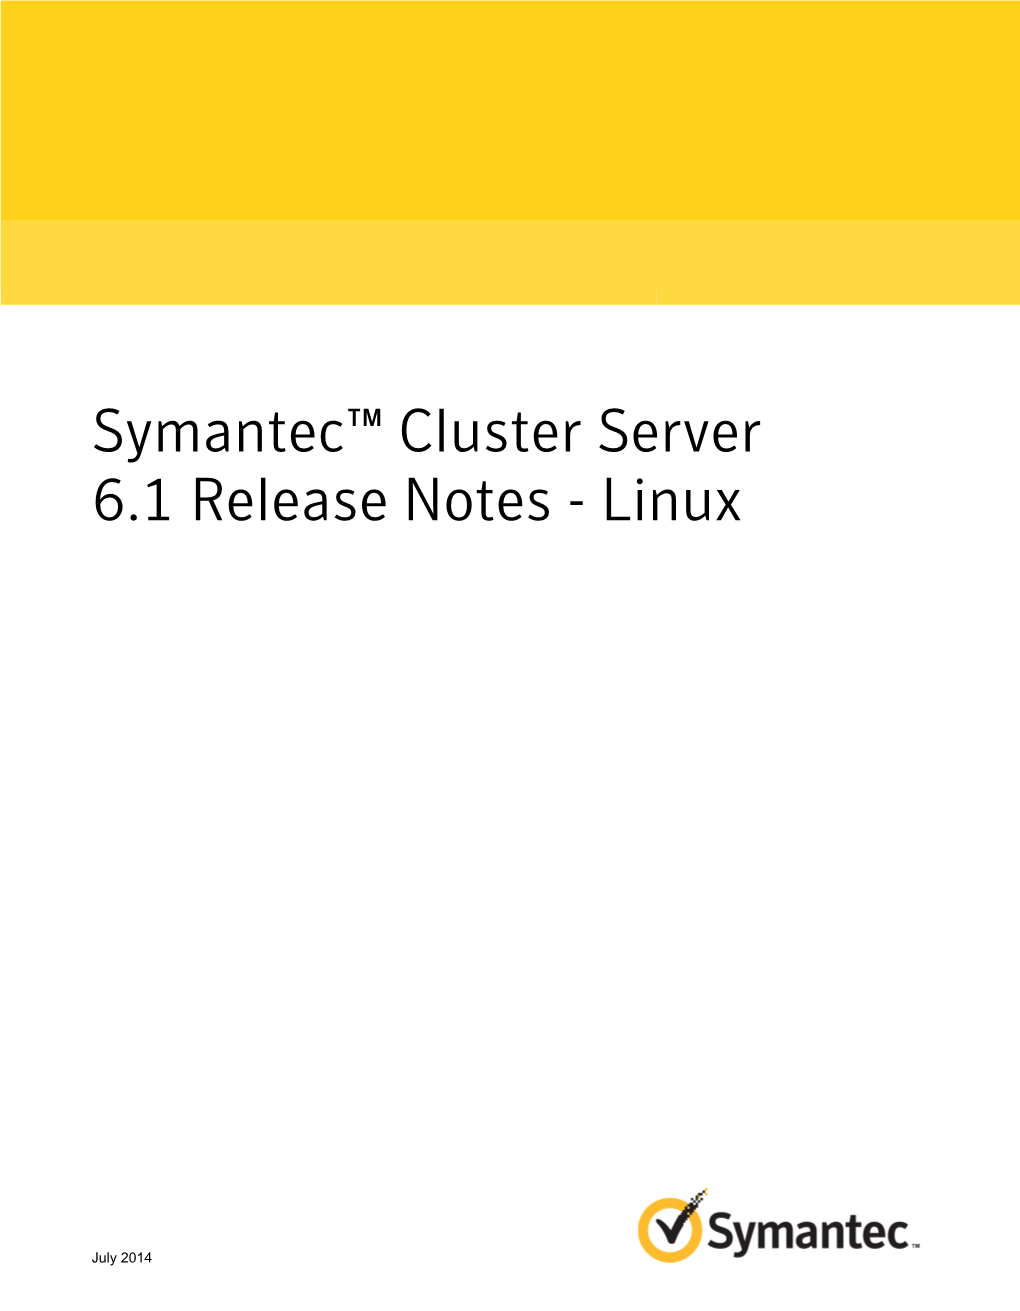 Symantec™ Cluster Server 6.1 Release Notes - Linux